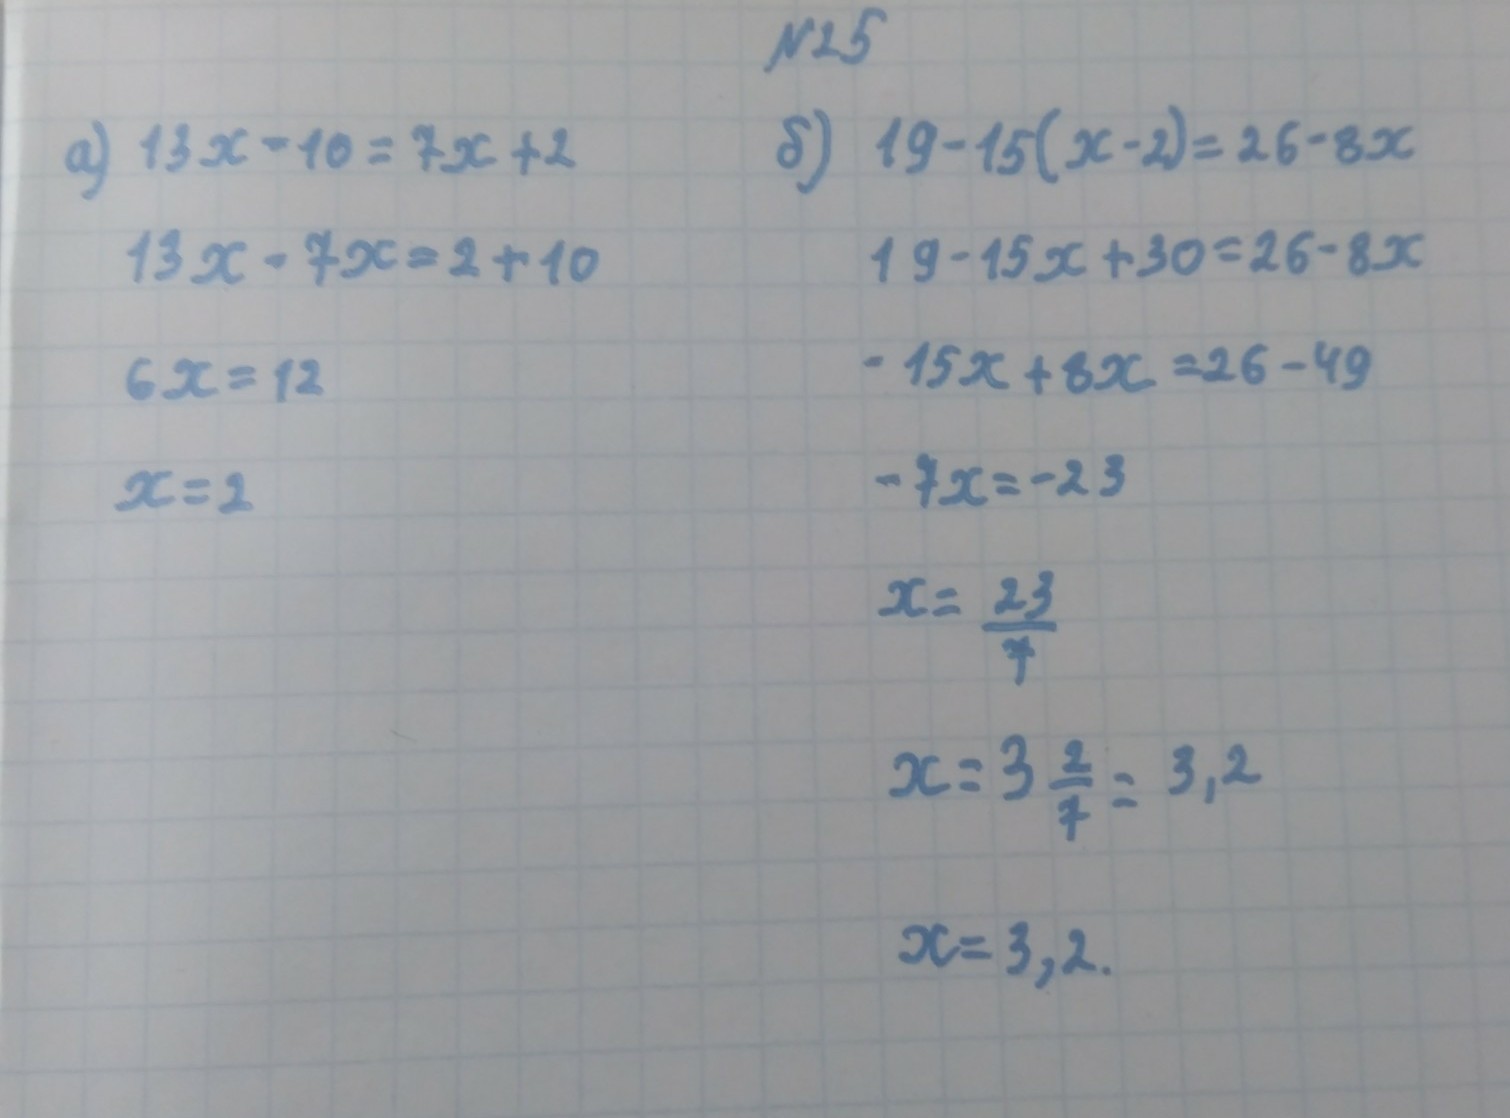 13 x 10 0 8. 13 X 2 2 X 13 2. (13-Х)(13-X) решение. 13x-26=130 решение. 13х-26 -130 решить.